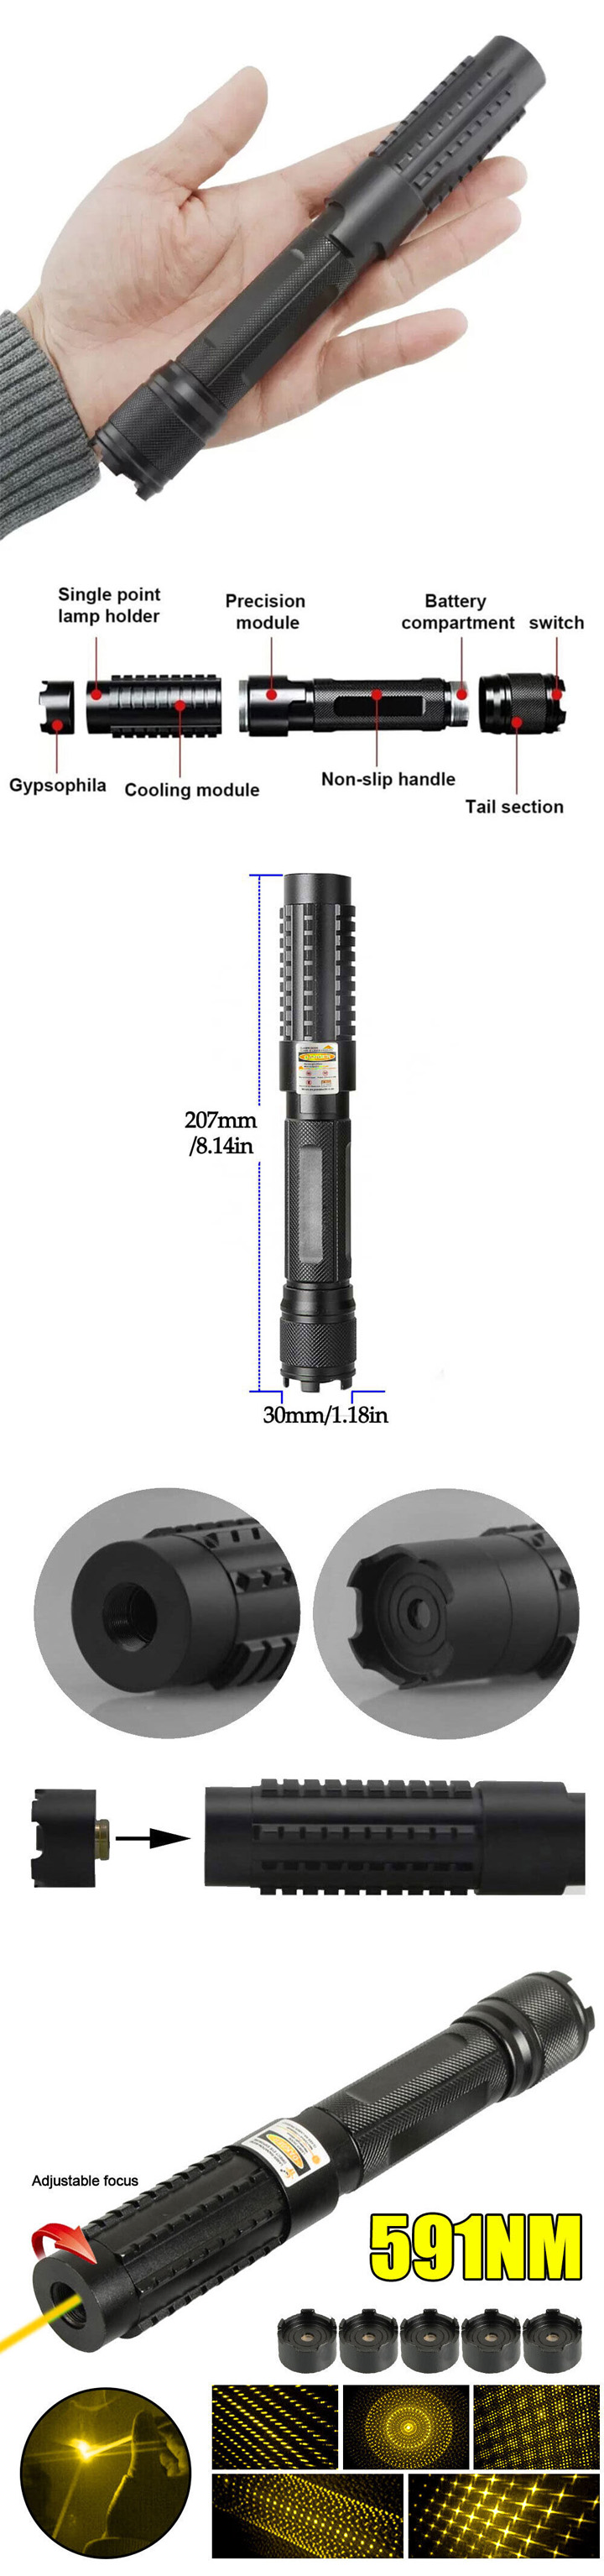 Pointeur laser 591 nm 10 mW